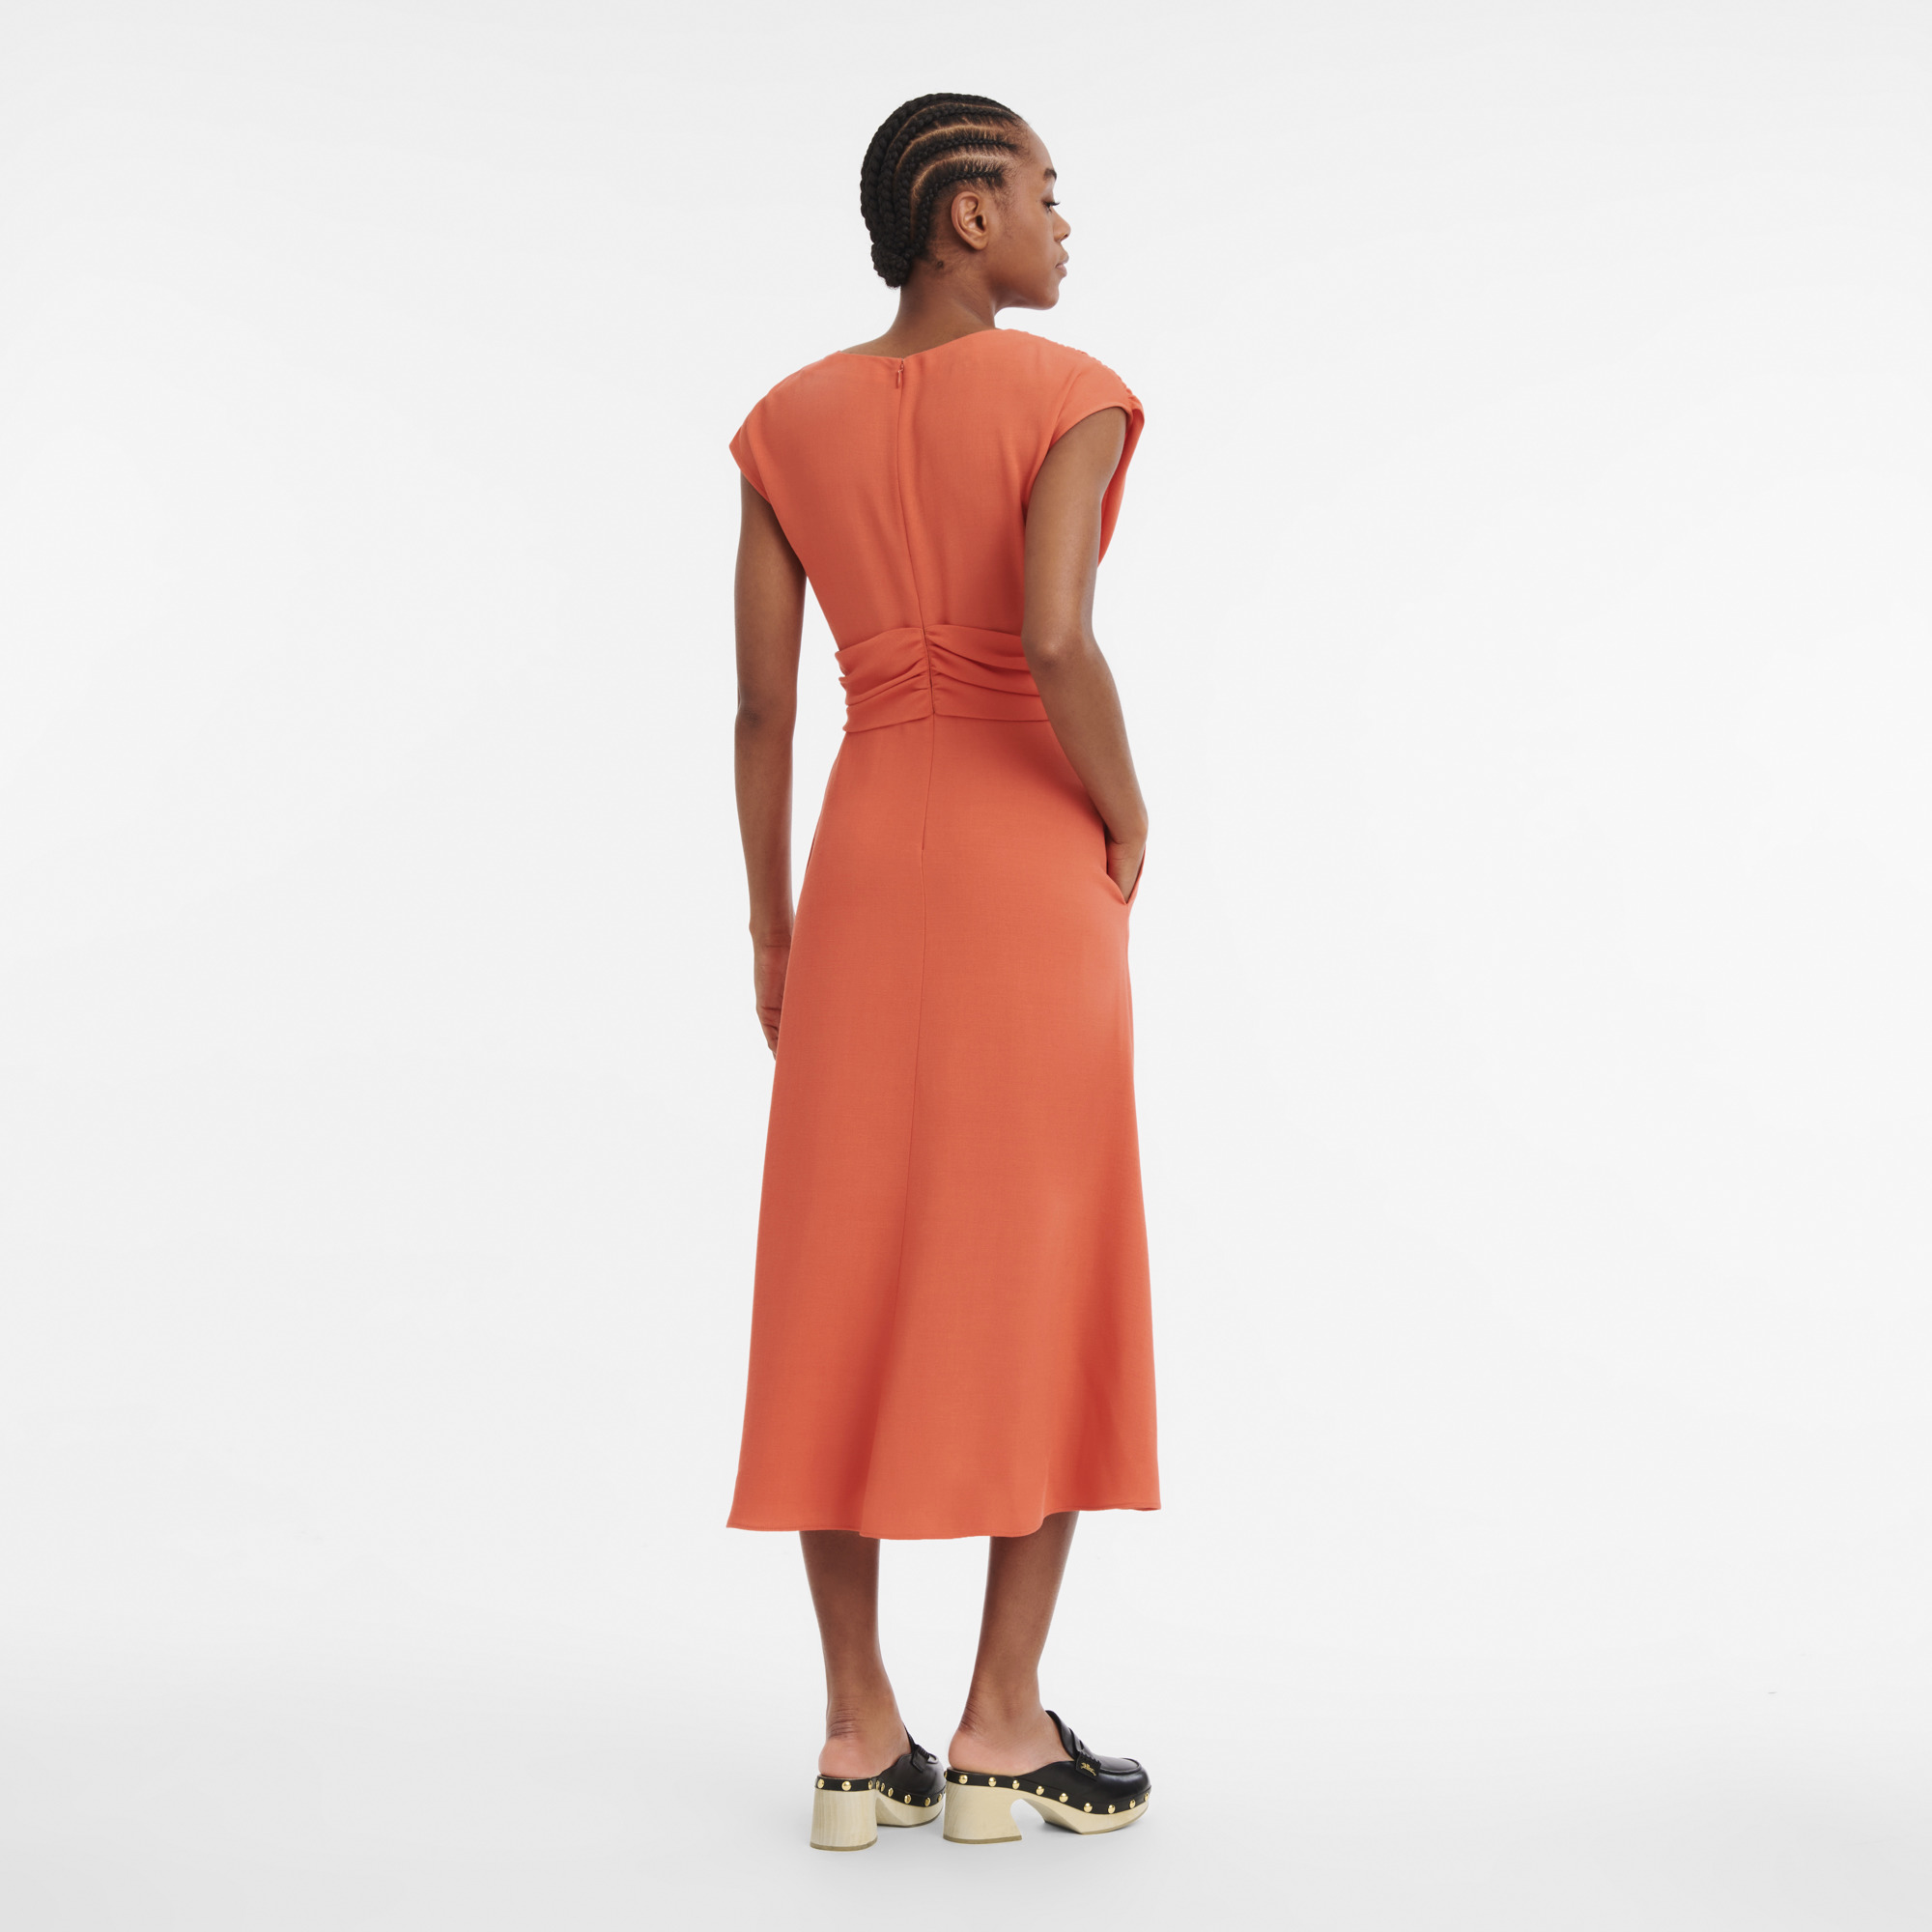 Dress Orange - Crepe - 3